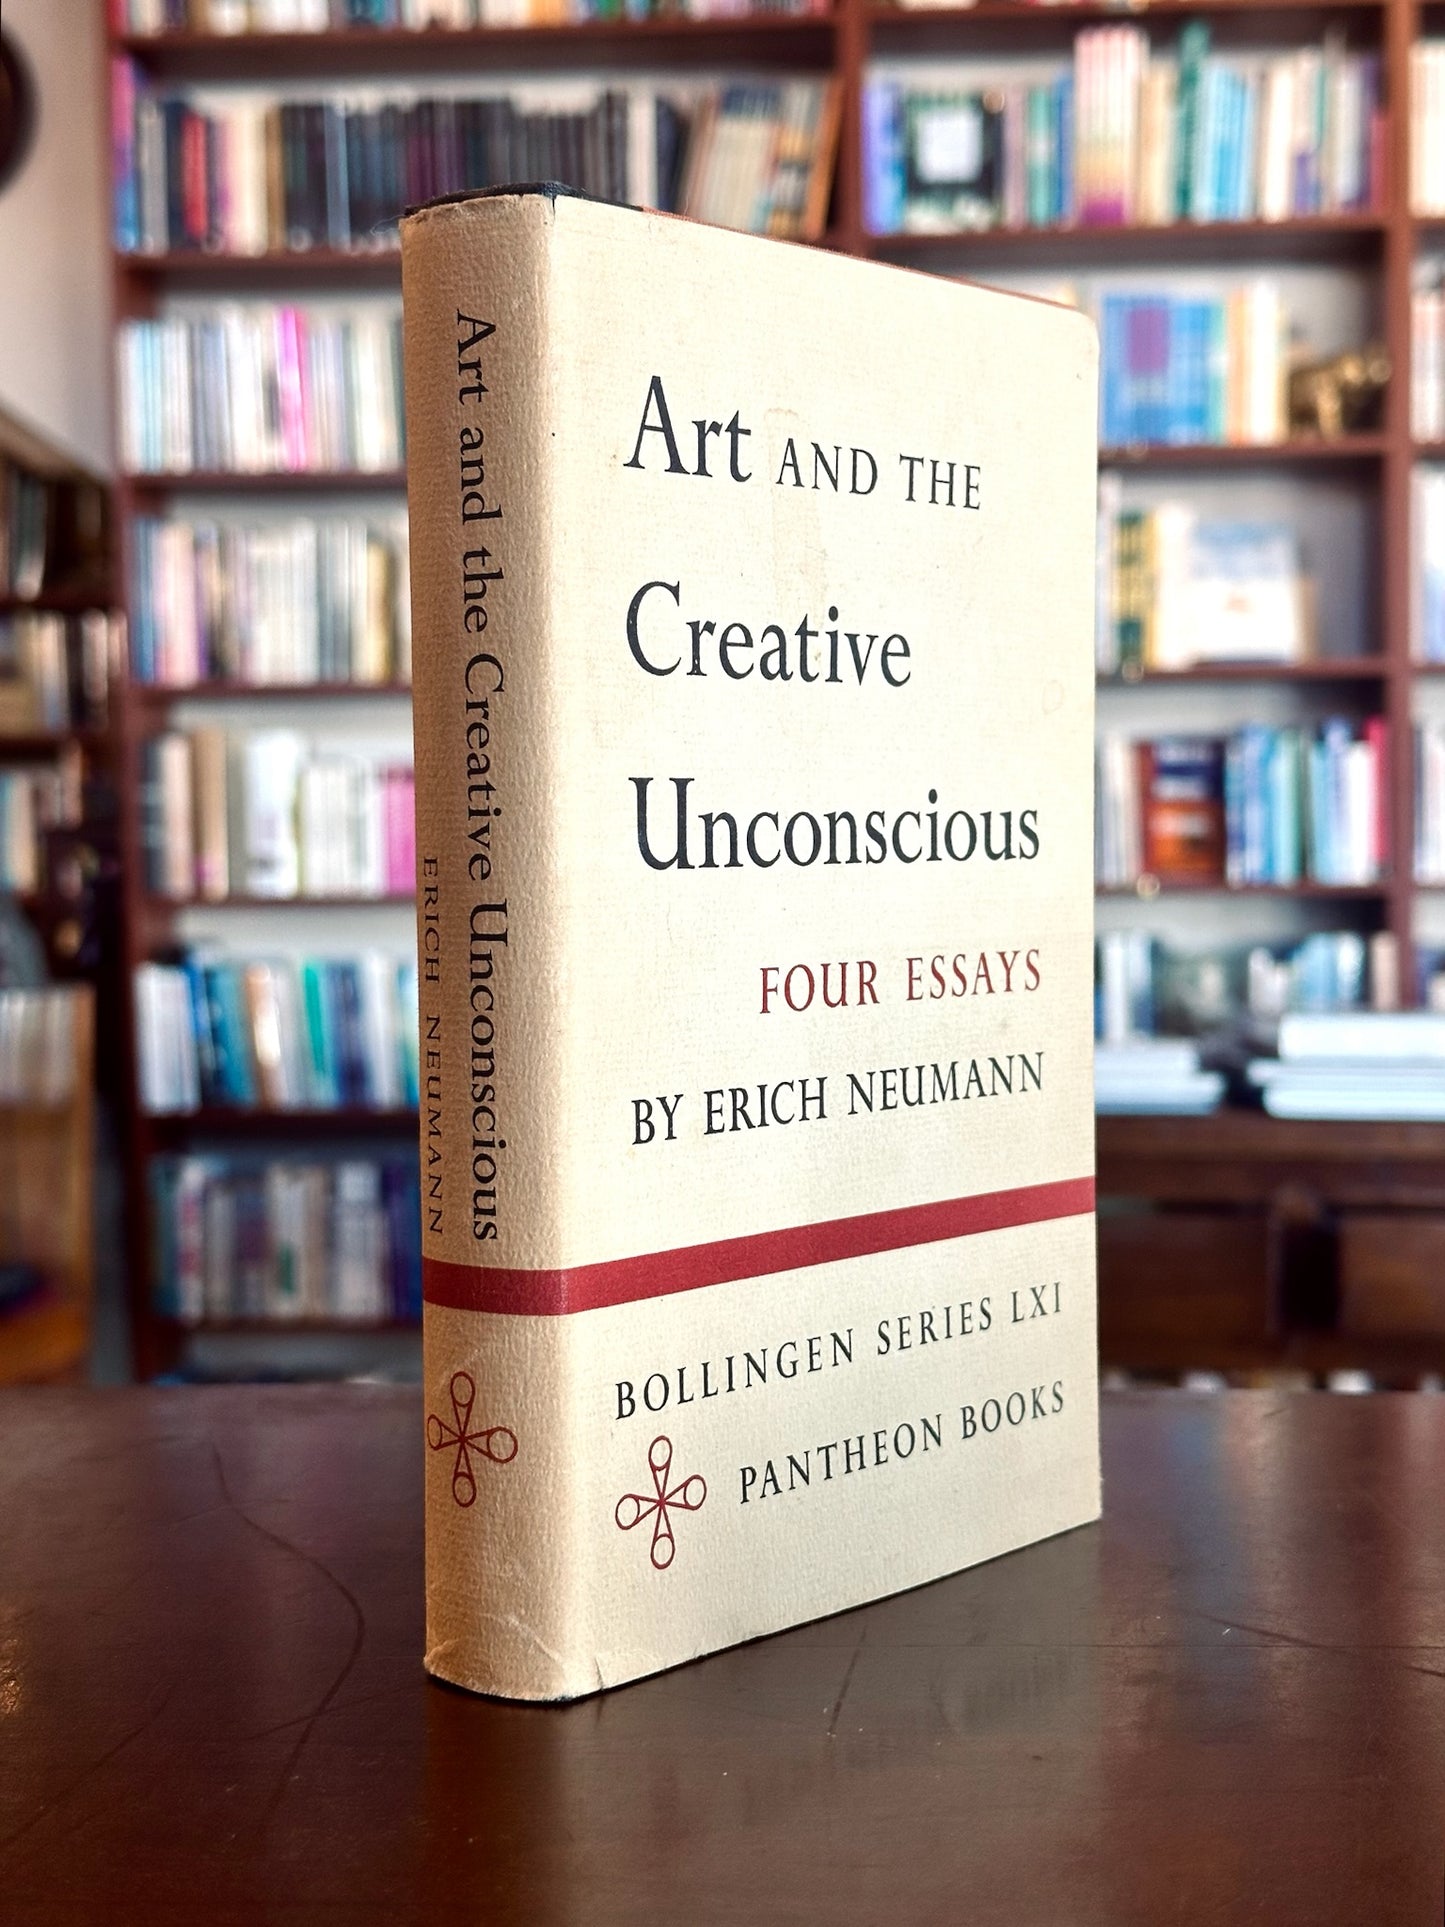 Art and The Creative Unconscious by Erich Neumann